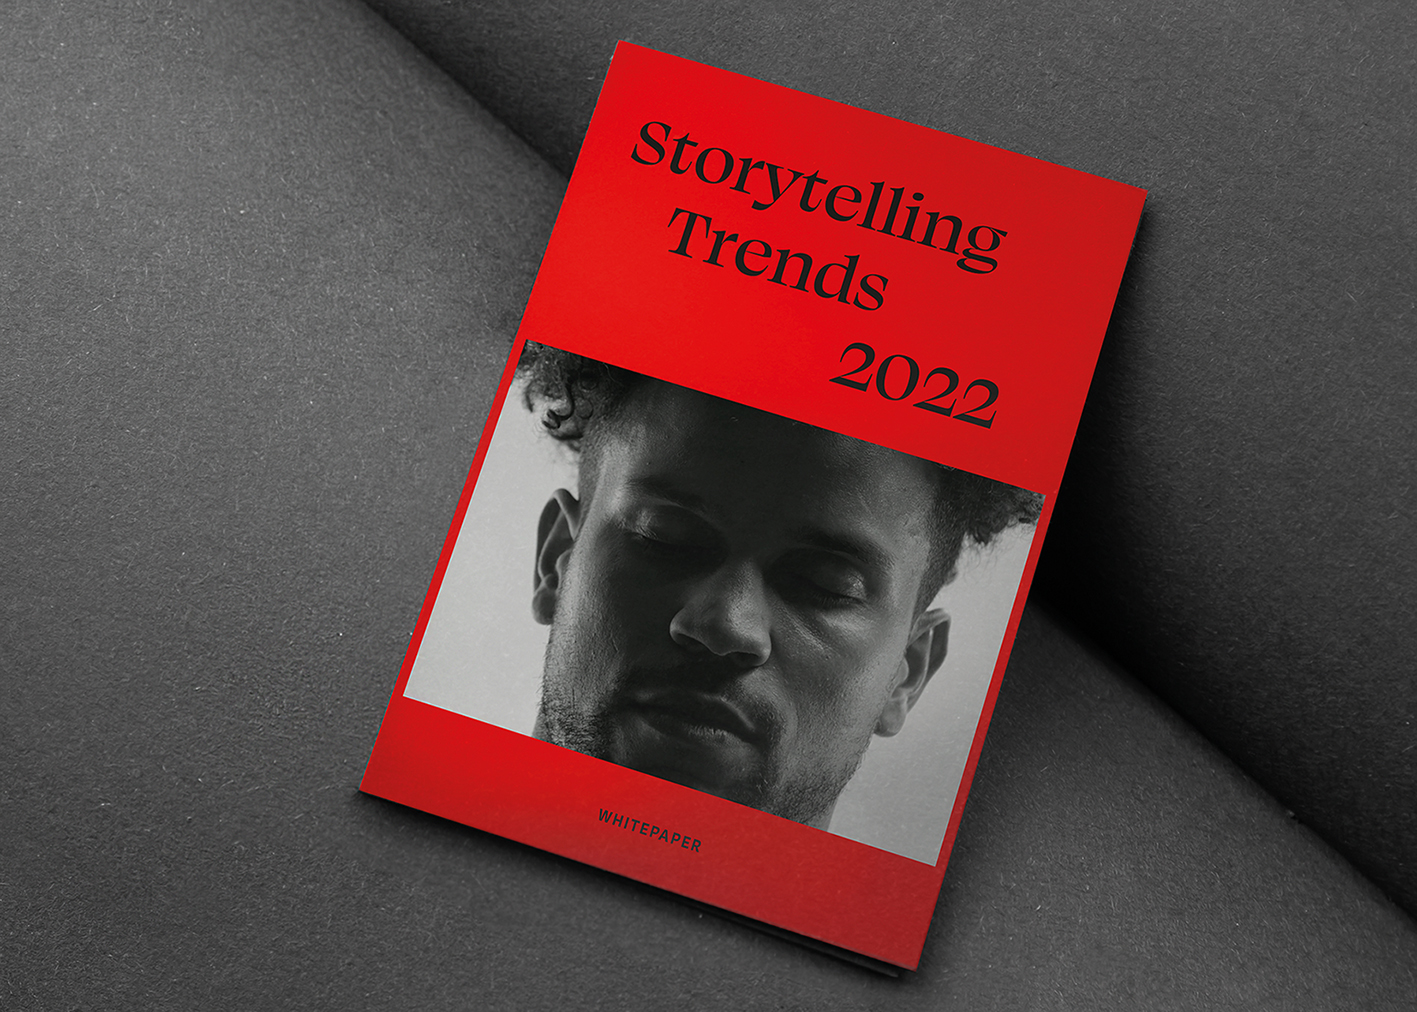 Storytelling Trends 2022